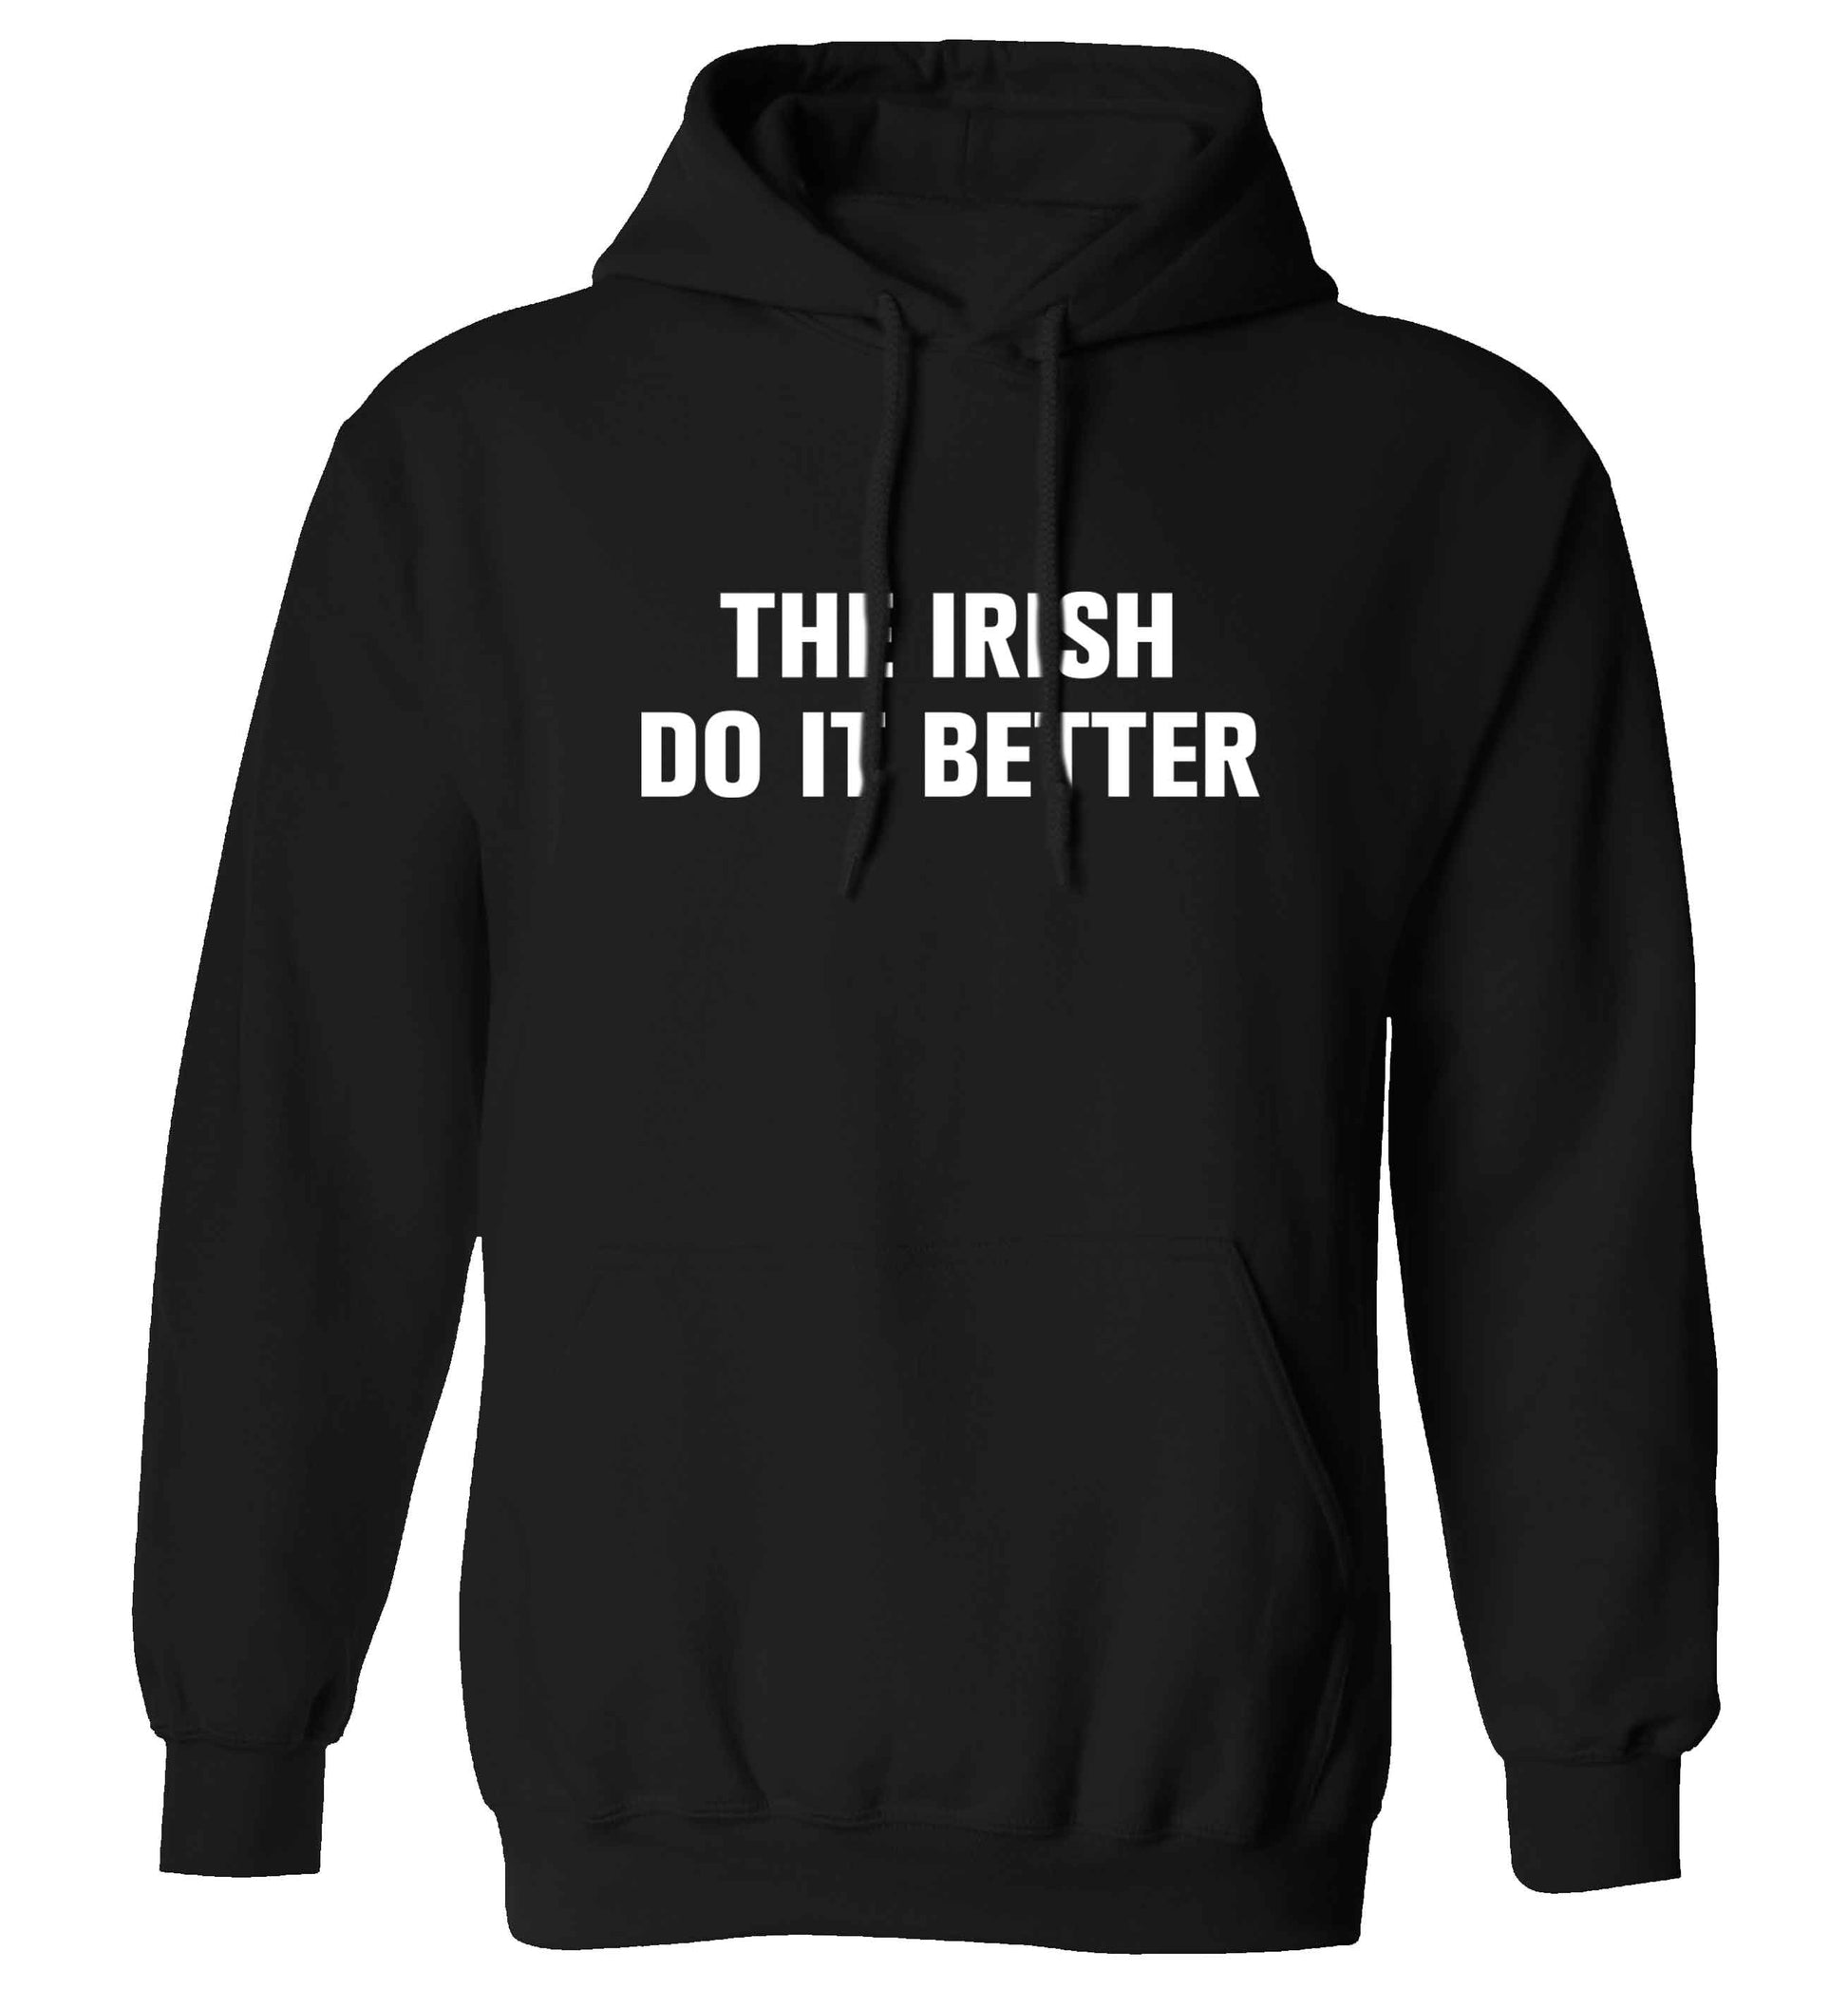 The Irish do it better adults unisex black hoodie 2XL